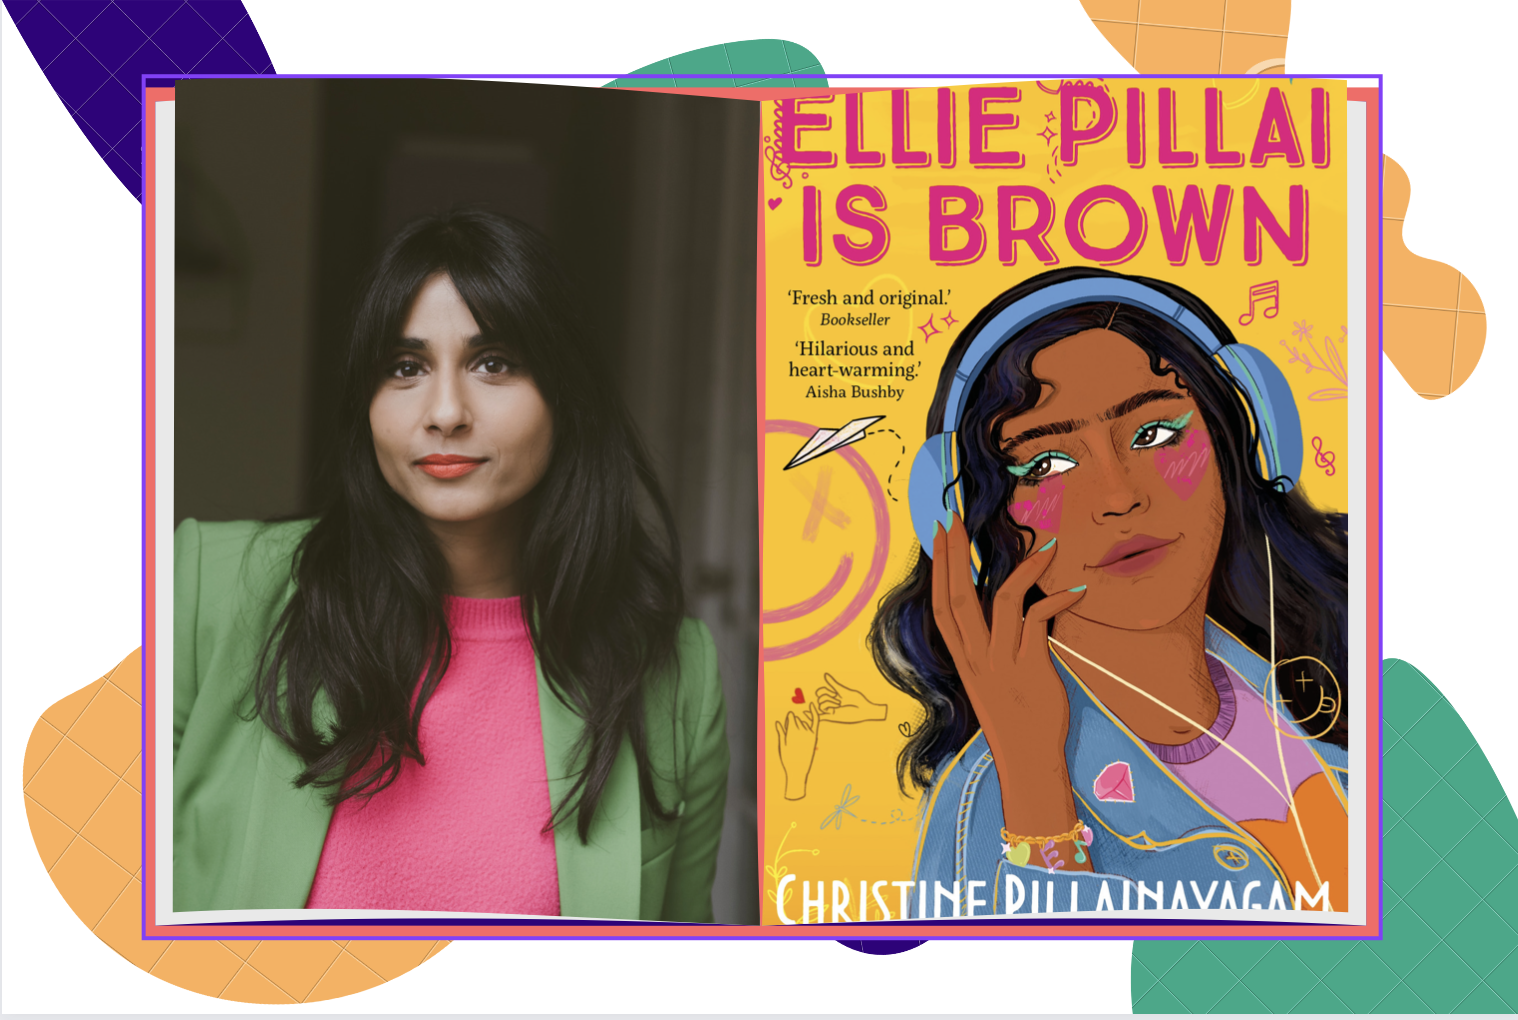 Ellie Pillai Is Brown': Christine Pillainayagam's Joyful Youth Novel of a  Music-Obsessed Tamil Teen